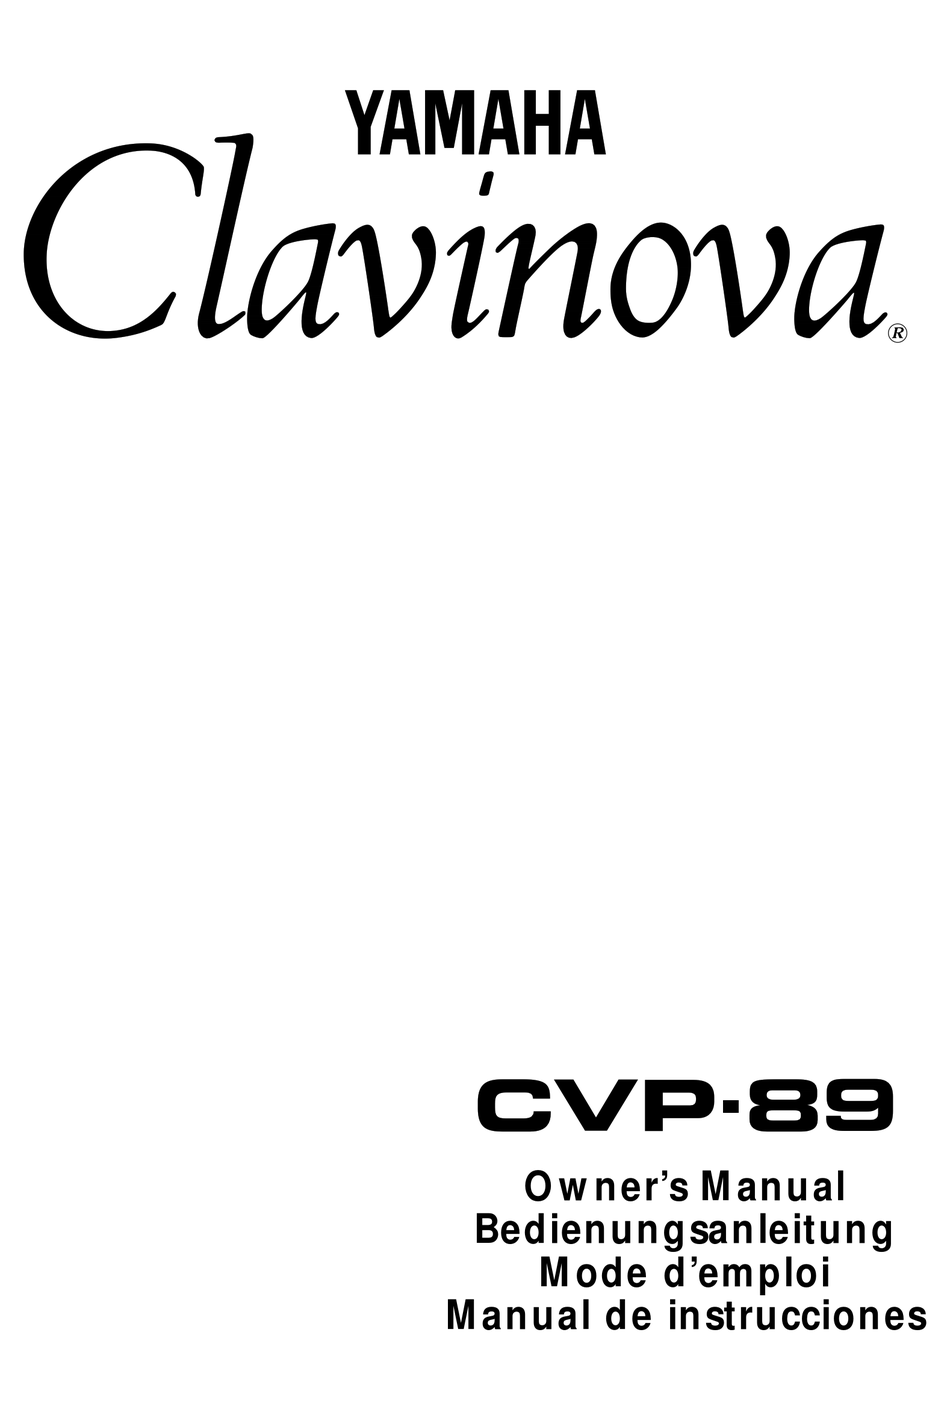 YAMAHA CLAVINOVA CVP-89 OWNER'S MANUAL Pdf Download | ManualsLib